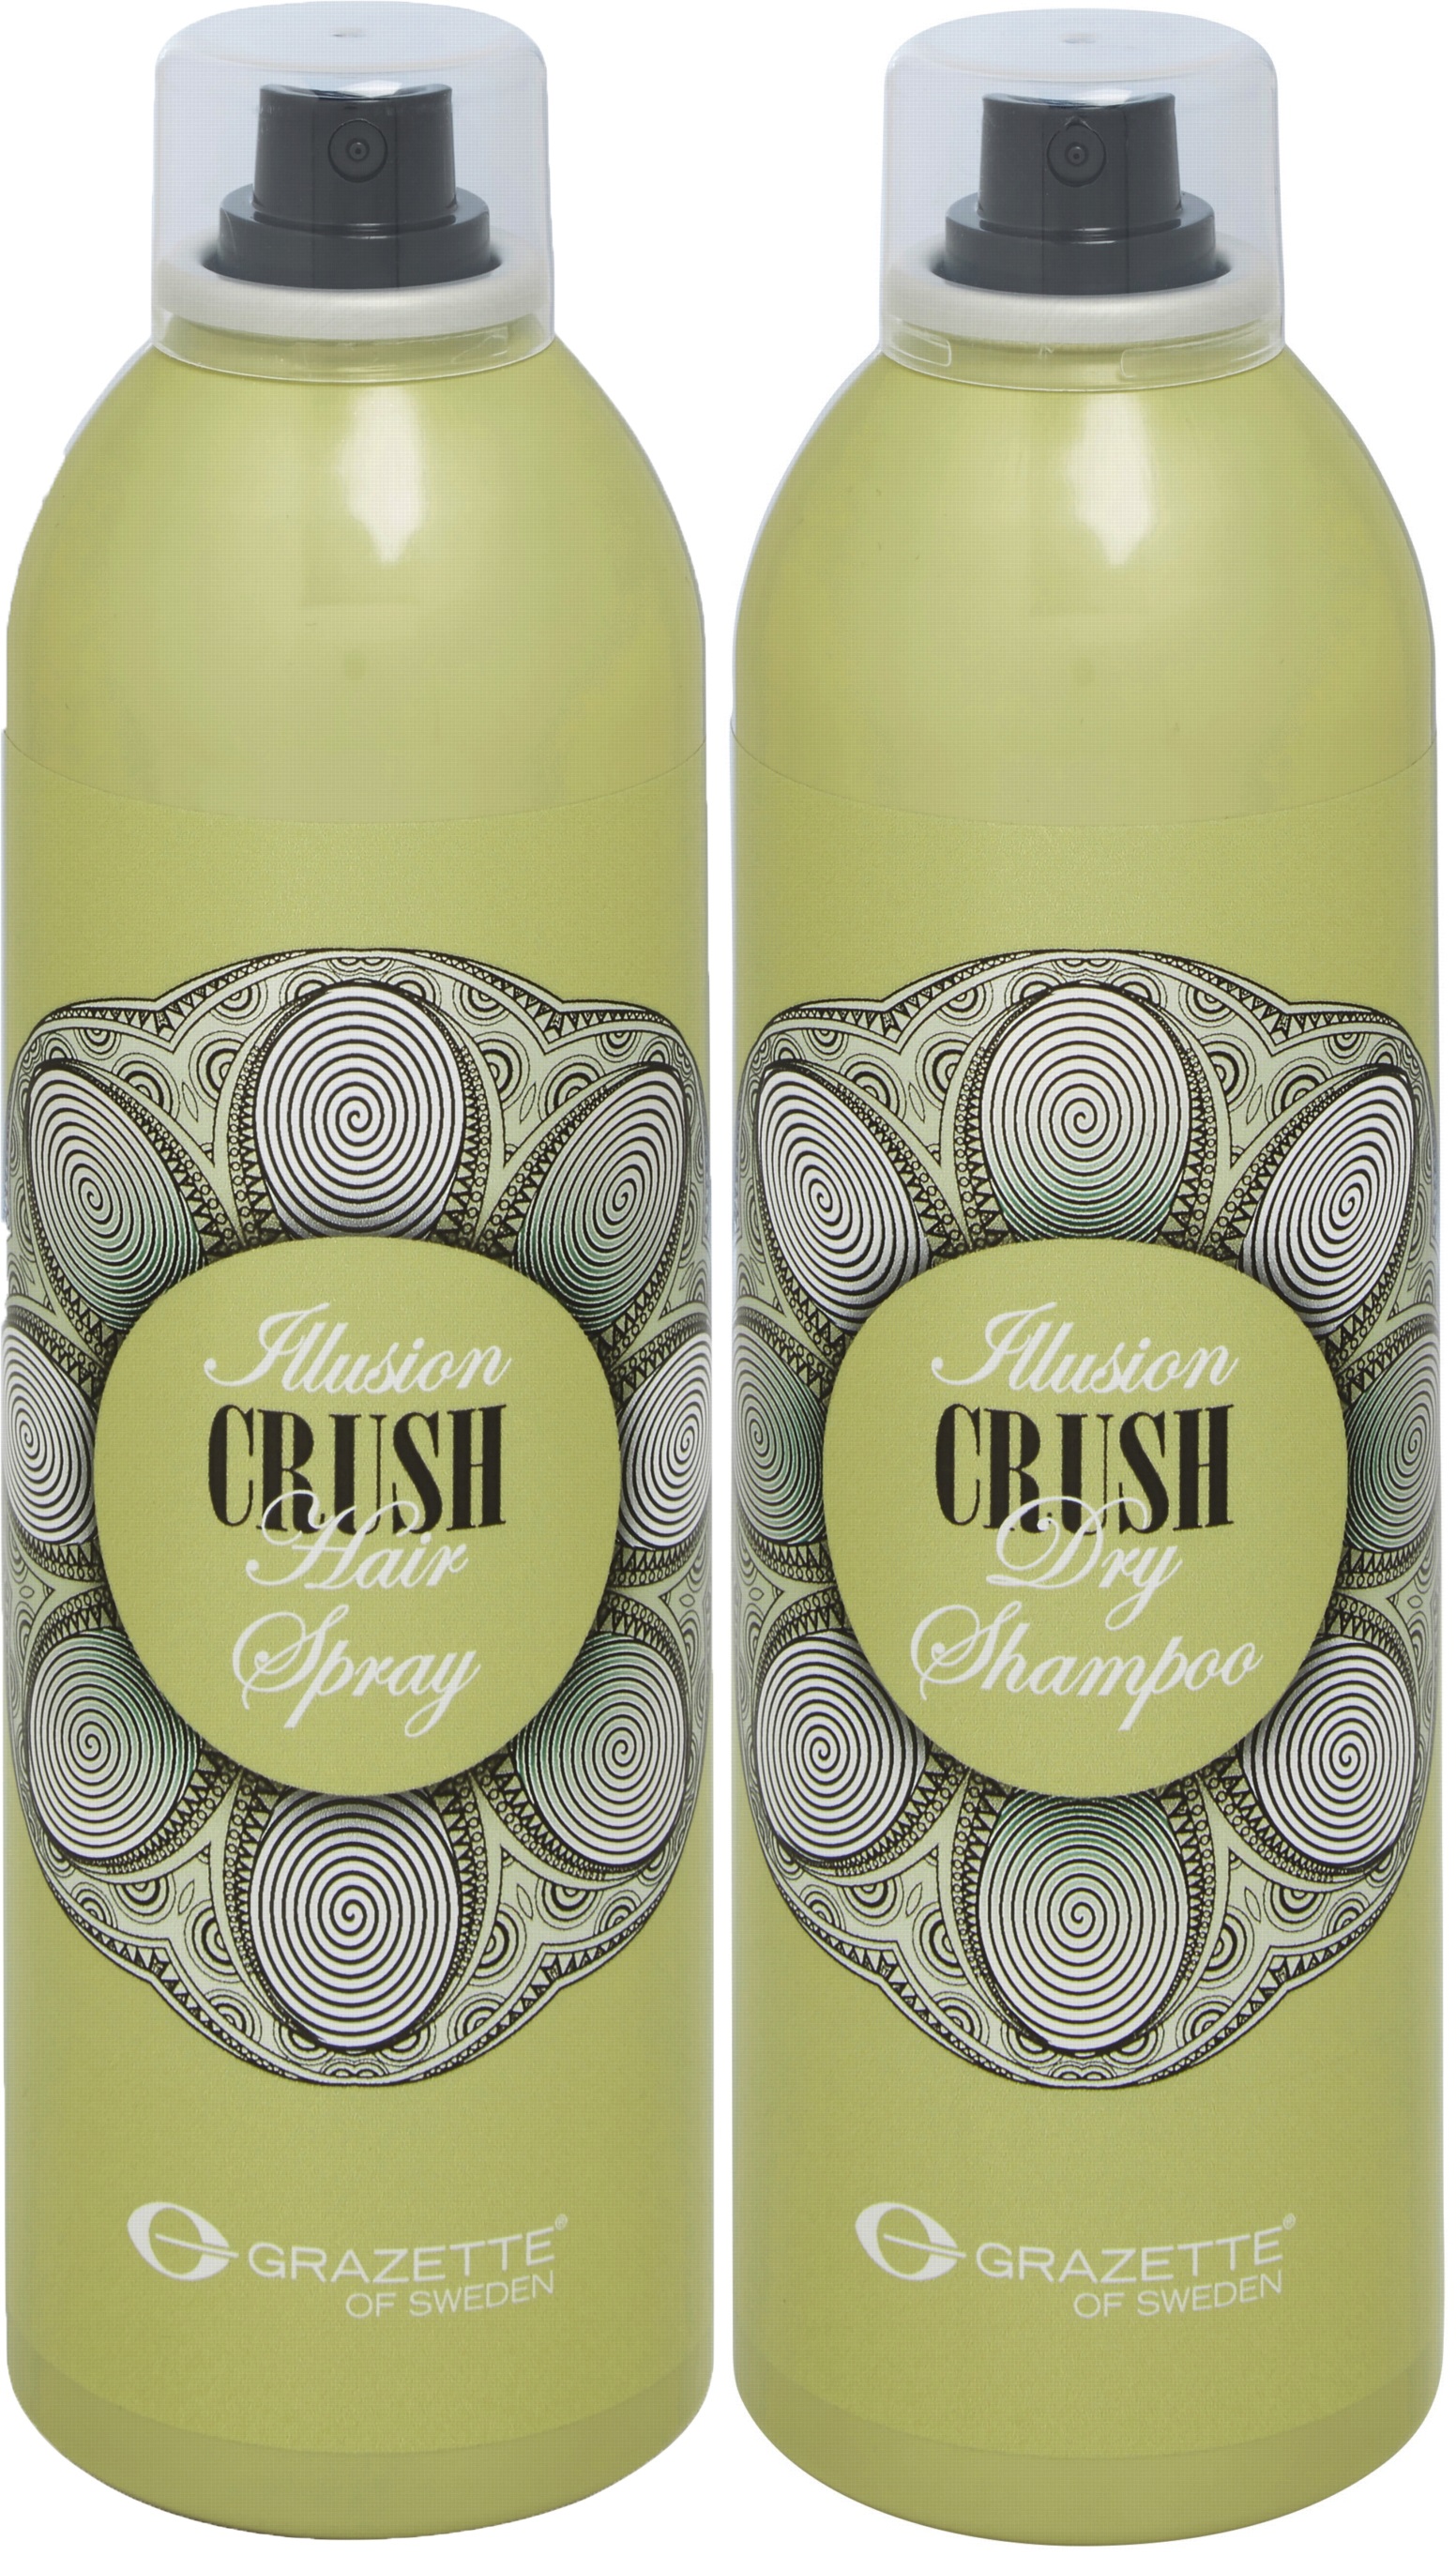 Grazette Crush Illusion Dry Shampoo + Hair Spray